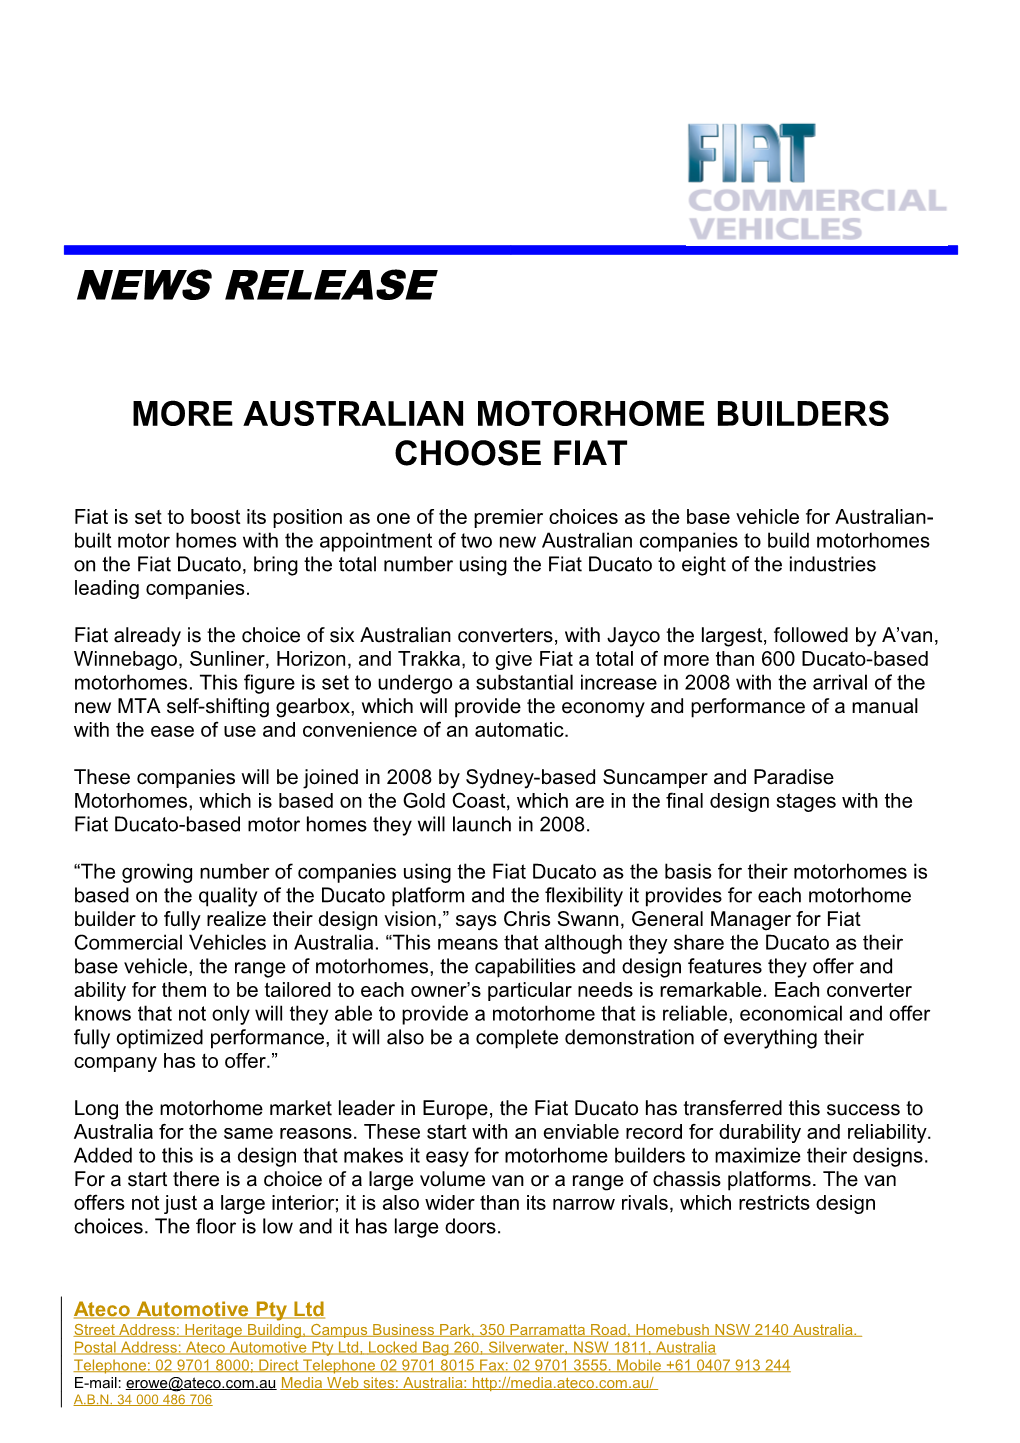 More Australian Motorhome Builders Choose Fiat